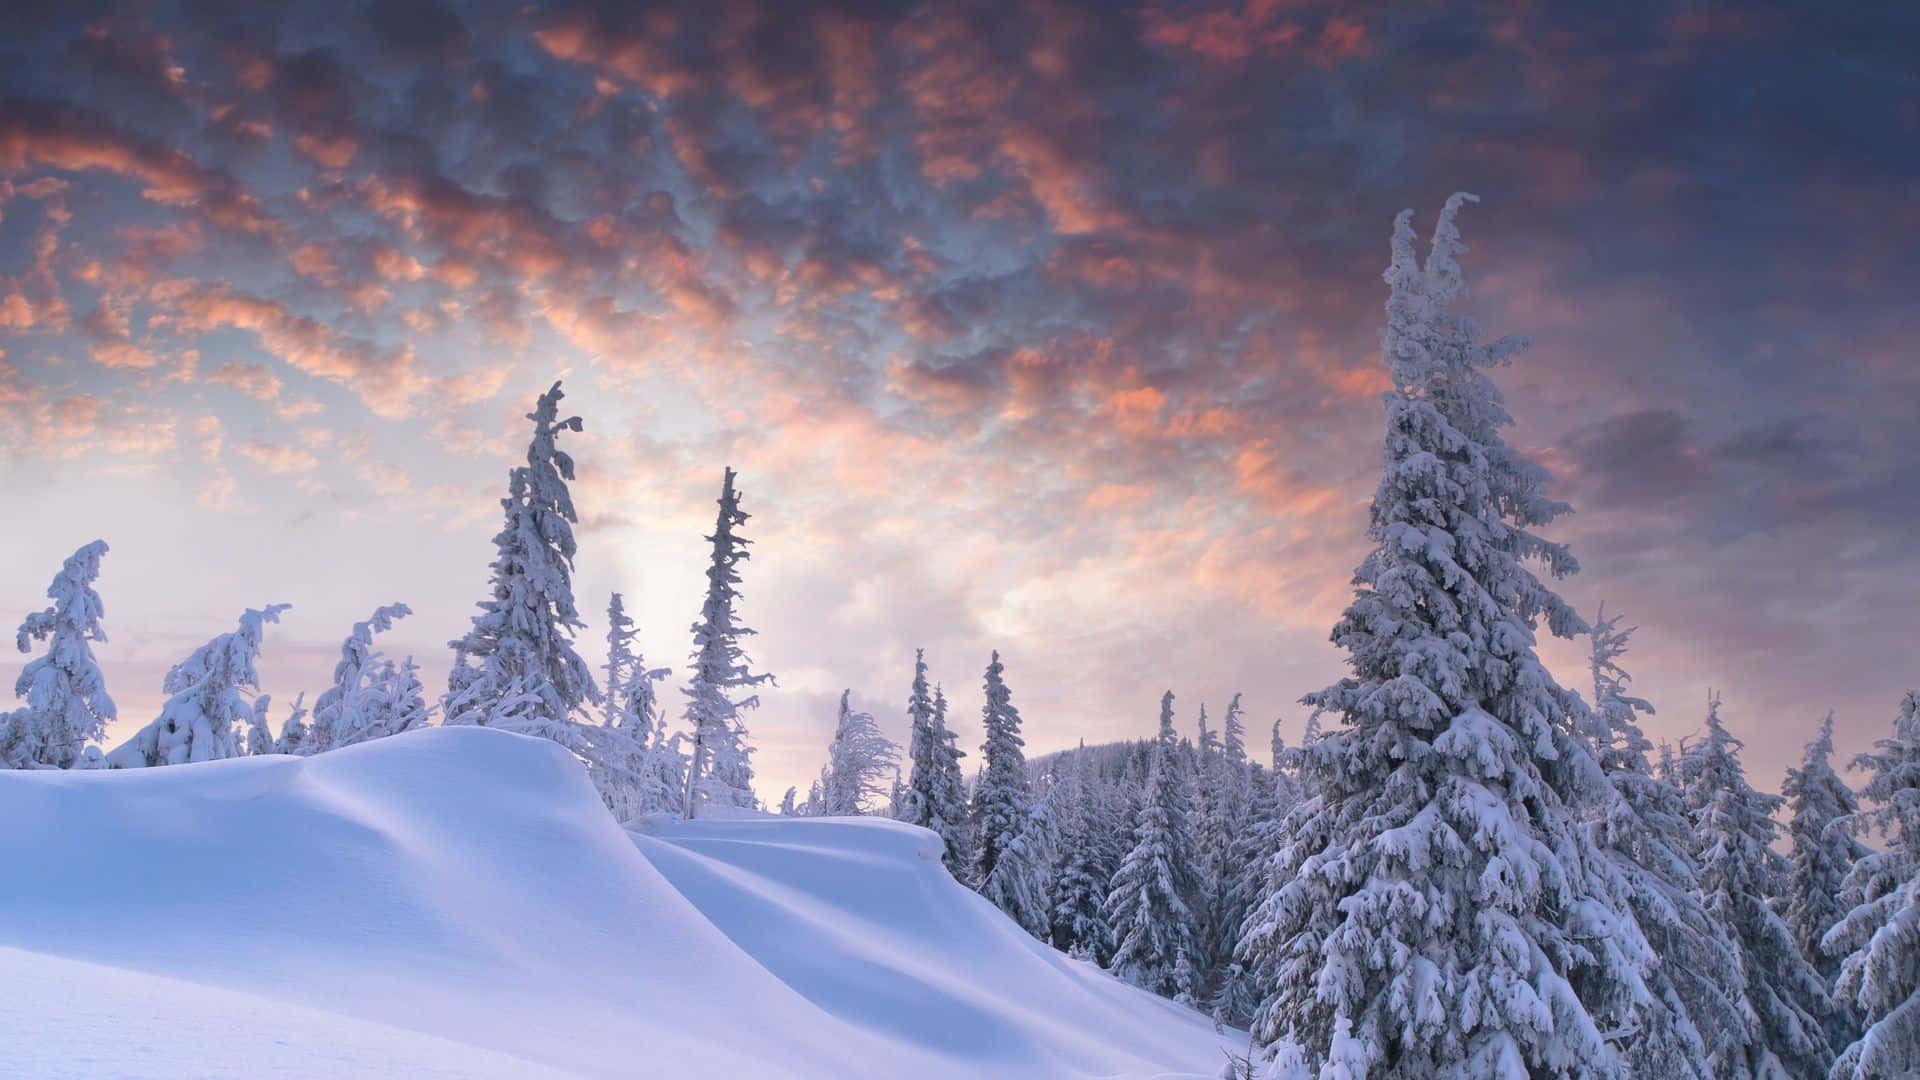 Sunset Clouds Over Winter Scenery Desktop Wallpaper